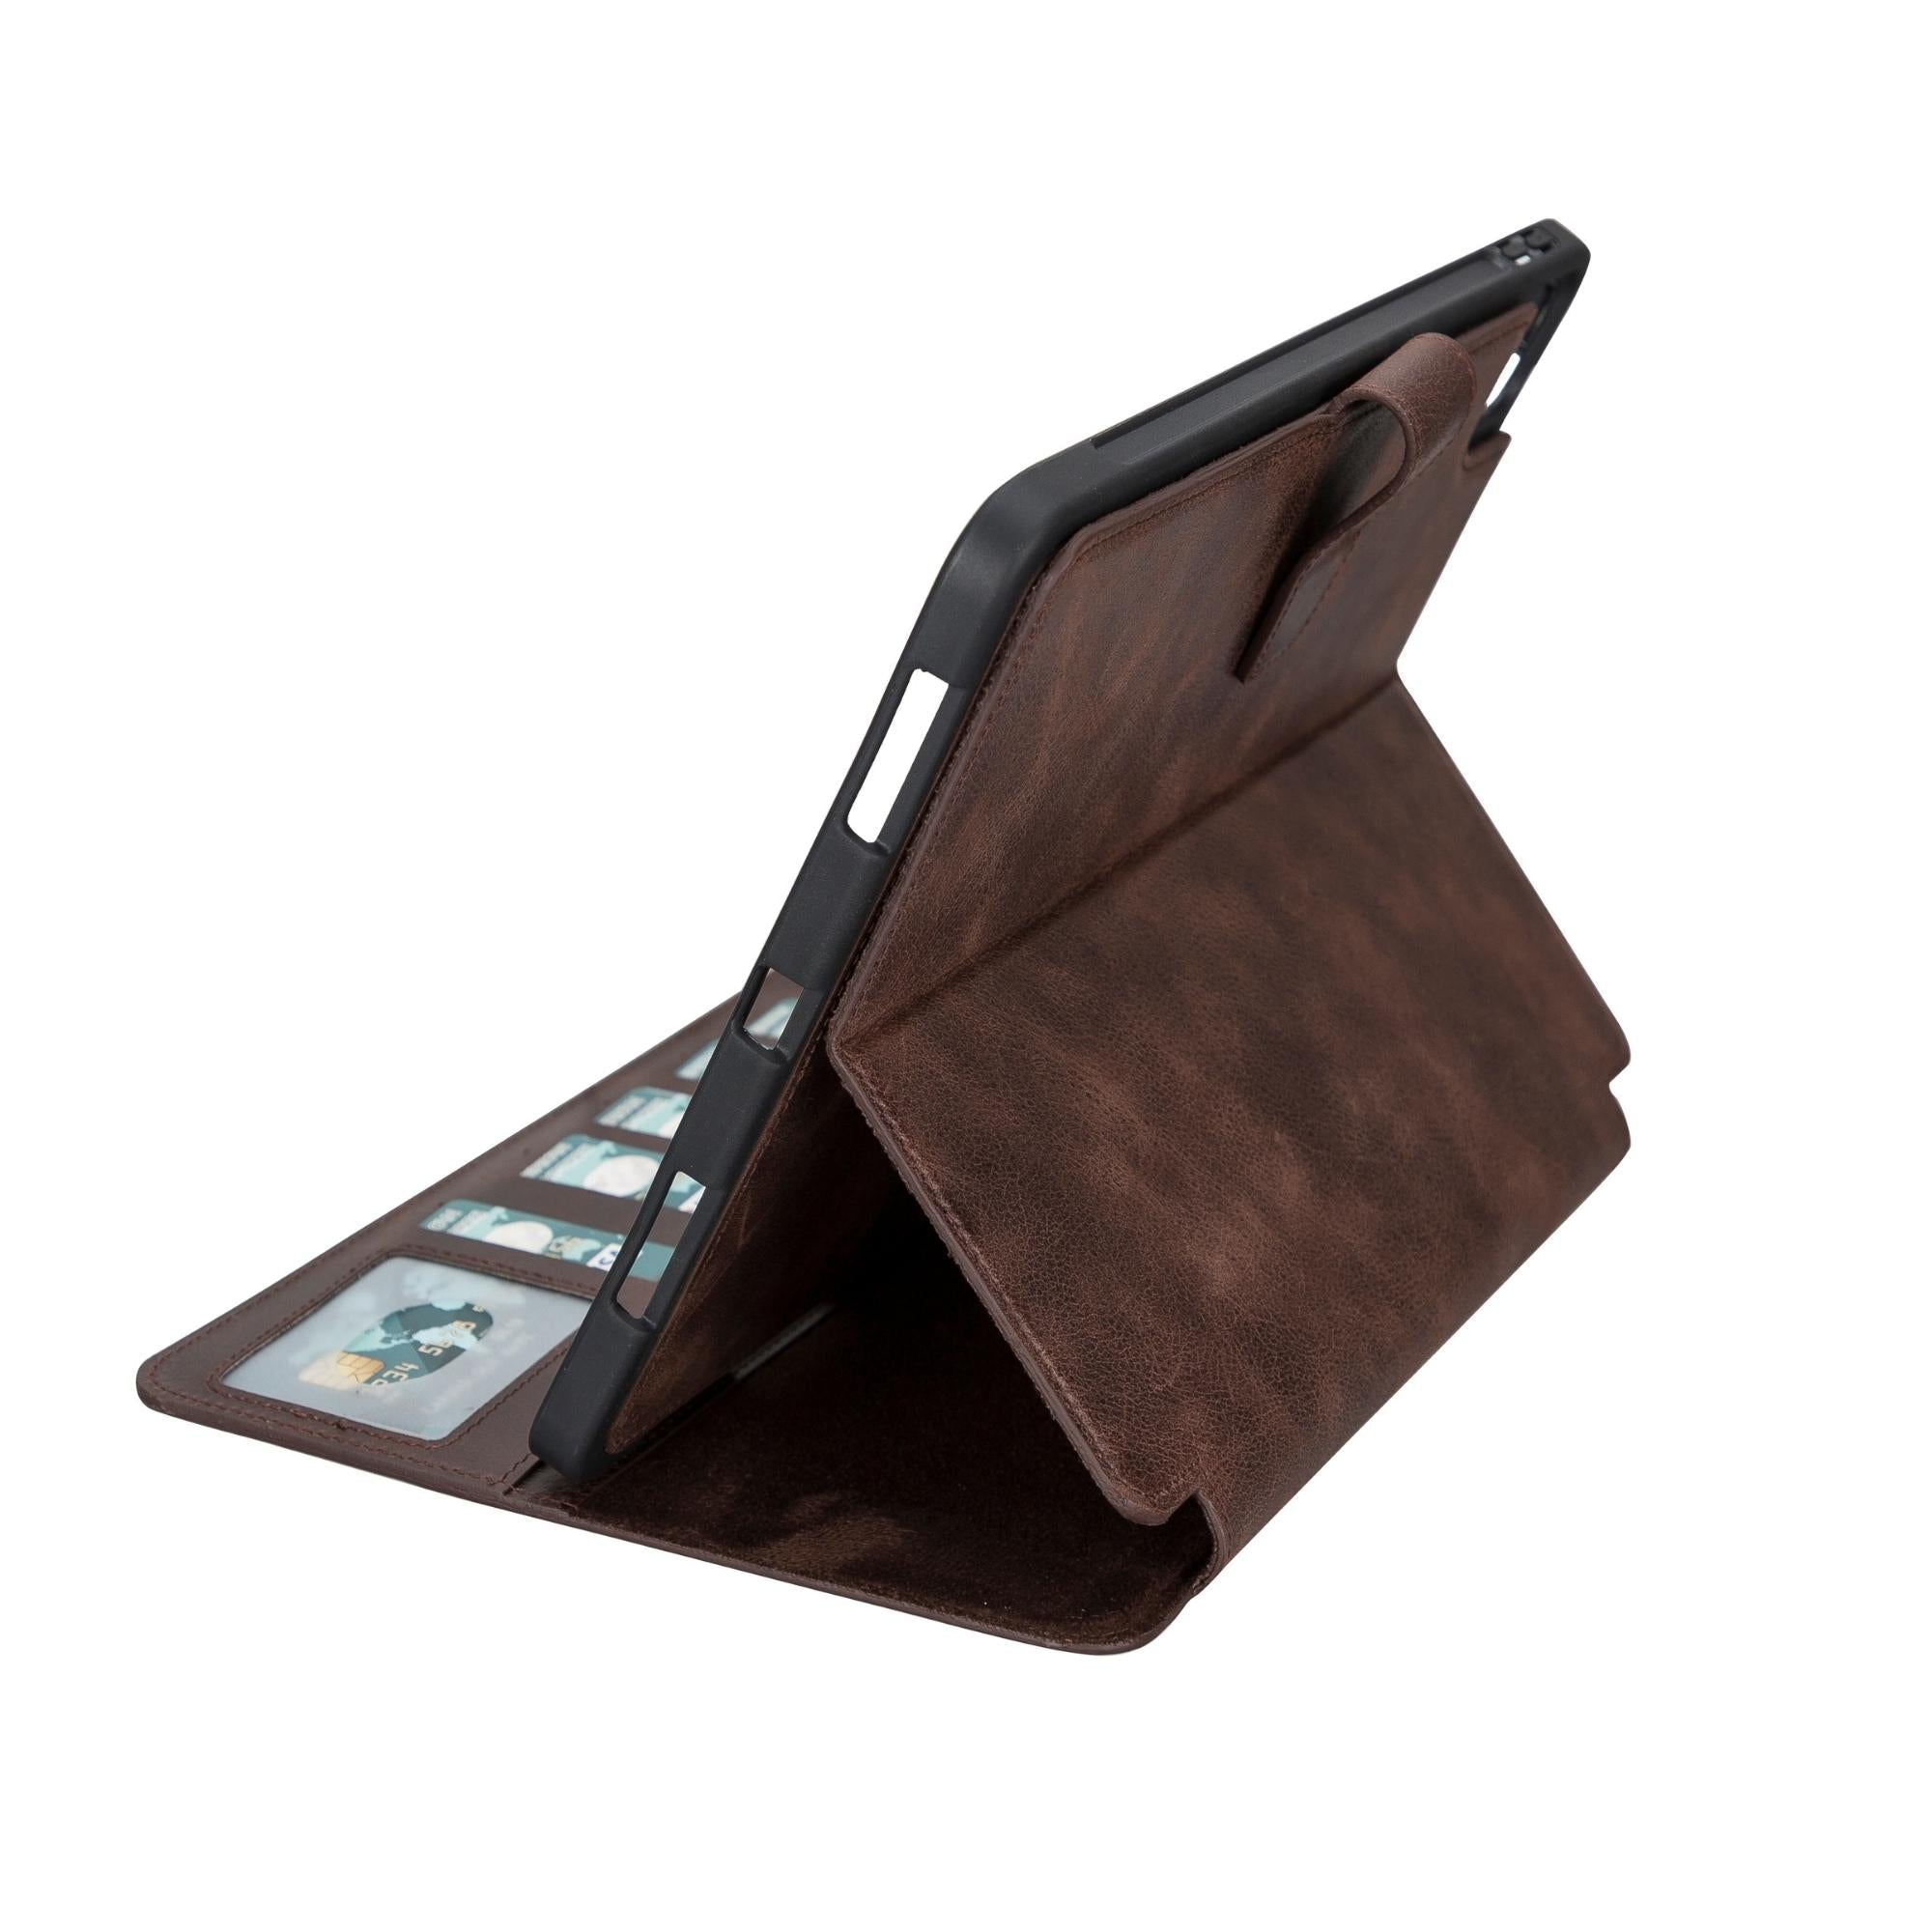 Utica Leather Wallet Case for iPad Pro 12.9-inch - Dark Brown - 5th Generation-2021 - TORONATA